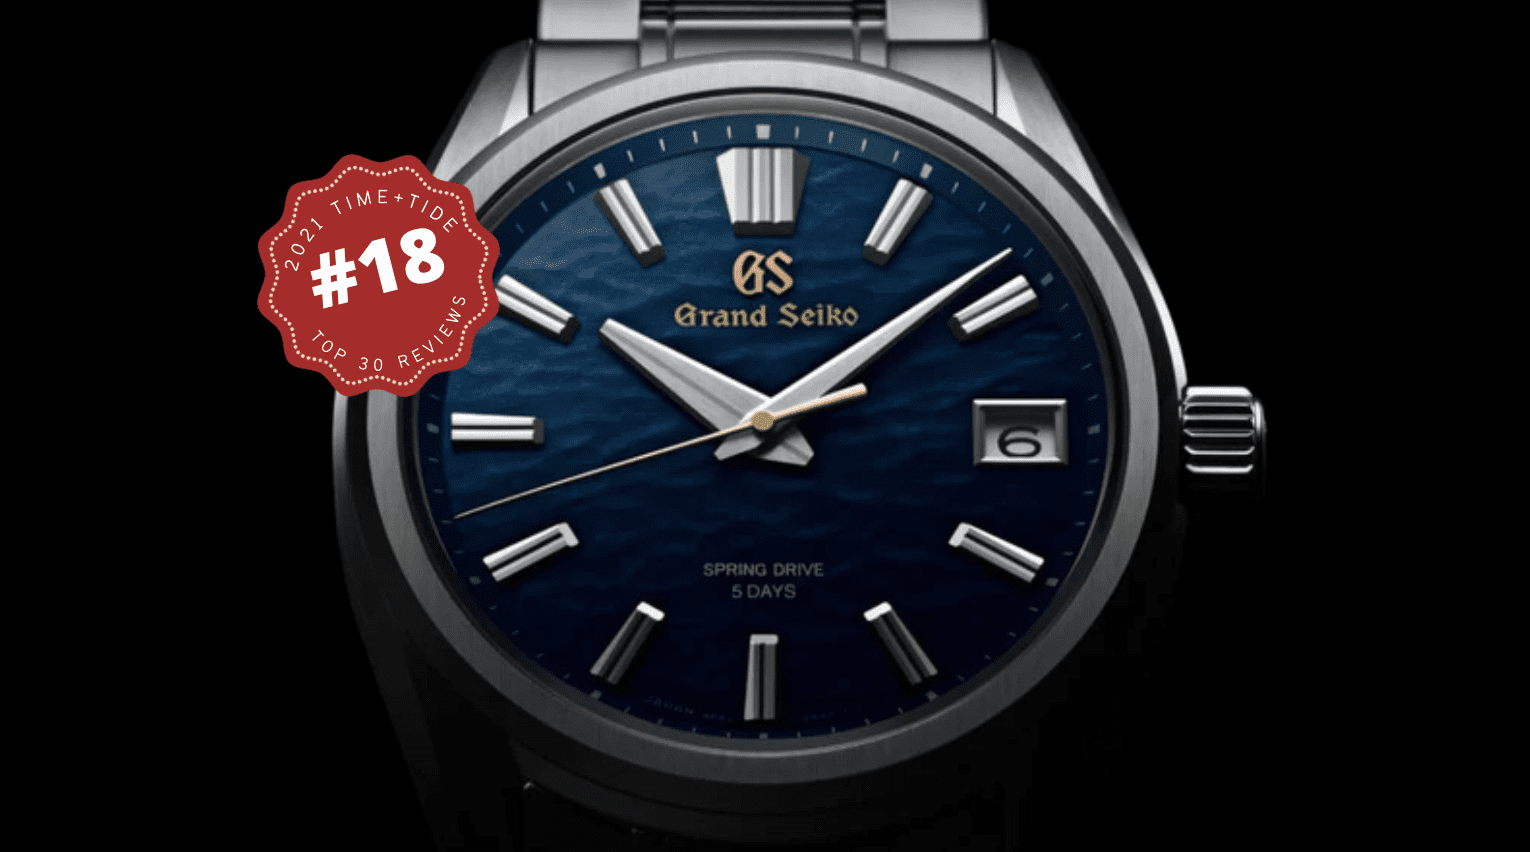 Grand Seiko SLGA007 140th Anniversary Limited Edition review